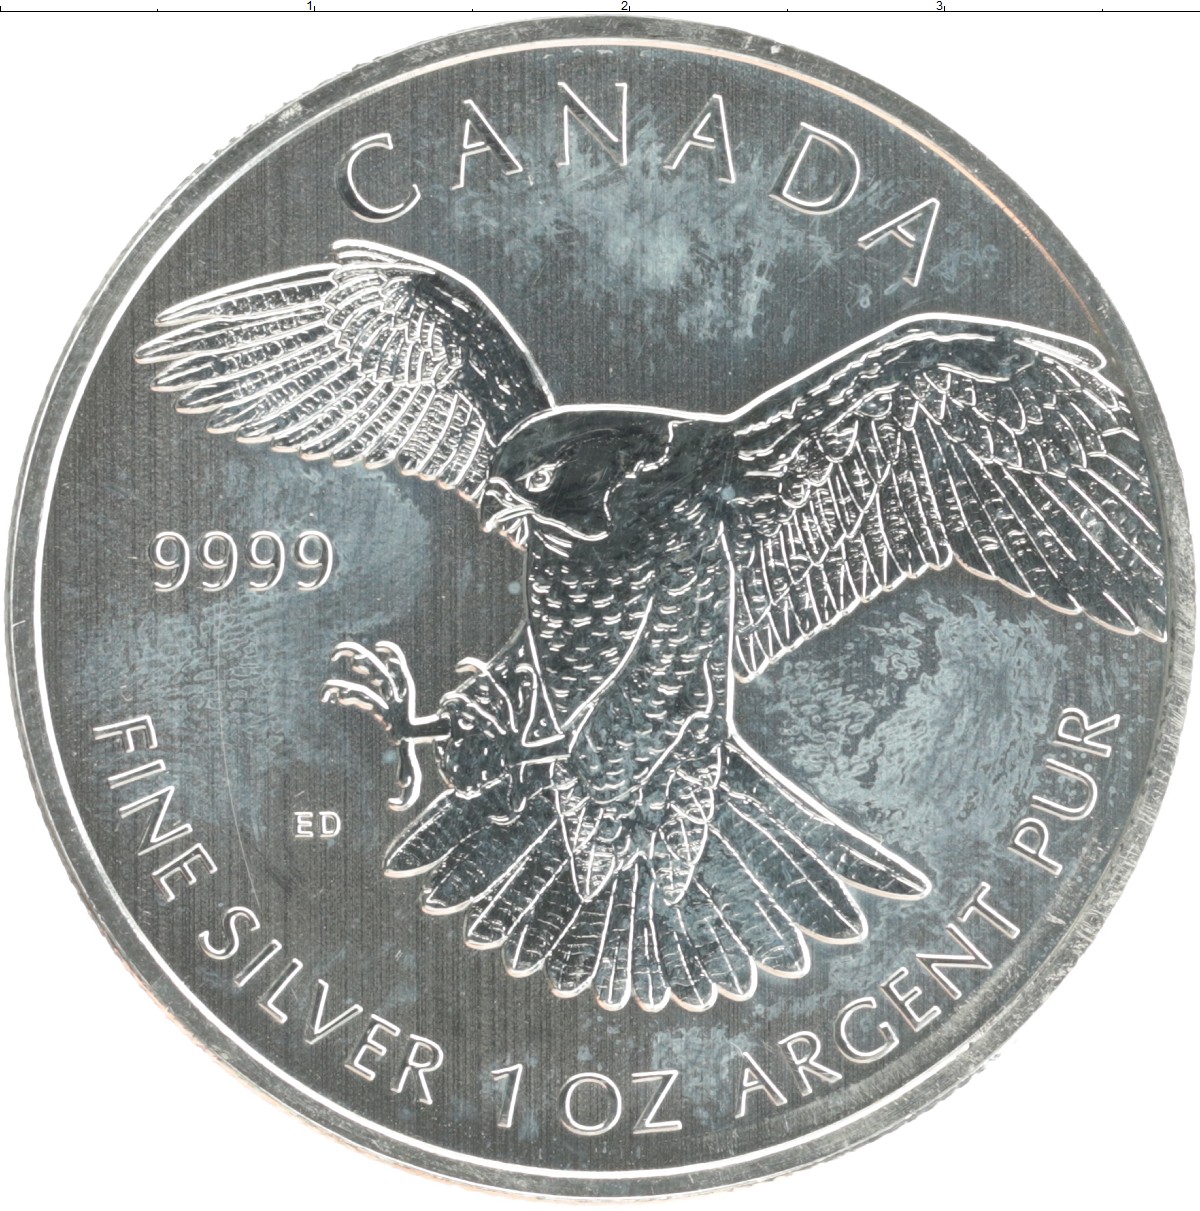 116 долларов в рублях. Канадский 5 доллар 2014. Канада 5 долларов Коршун. 5 Долларов 2014 Канада Орлан. 25 Долларов Канада фигурное катание 2014 серебро монета.